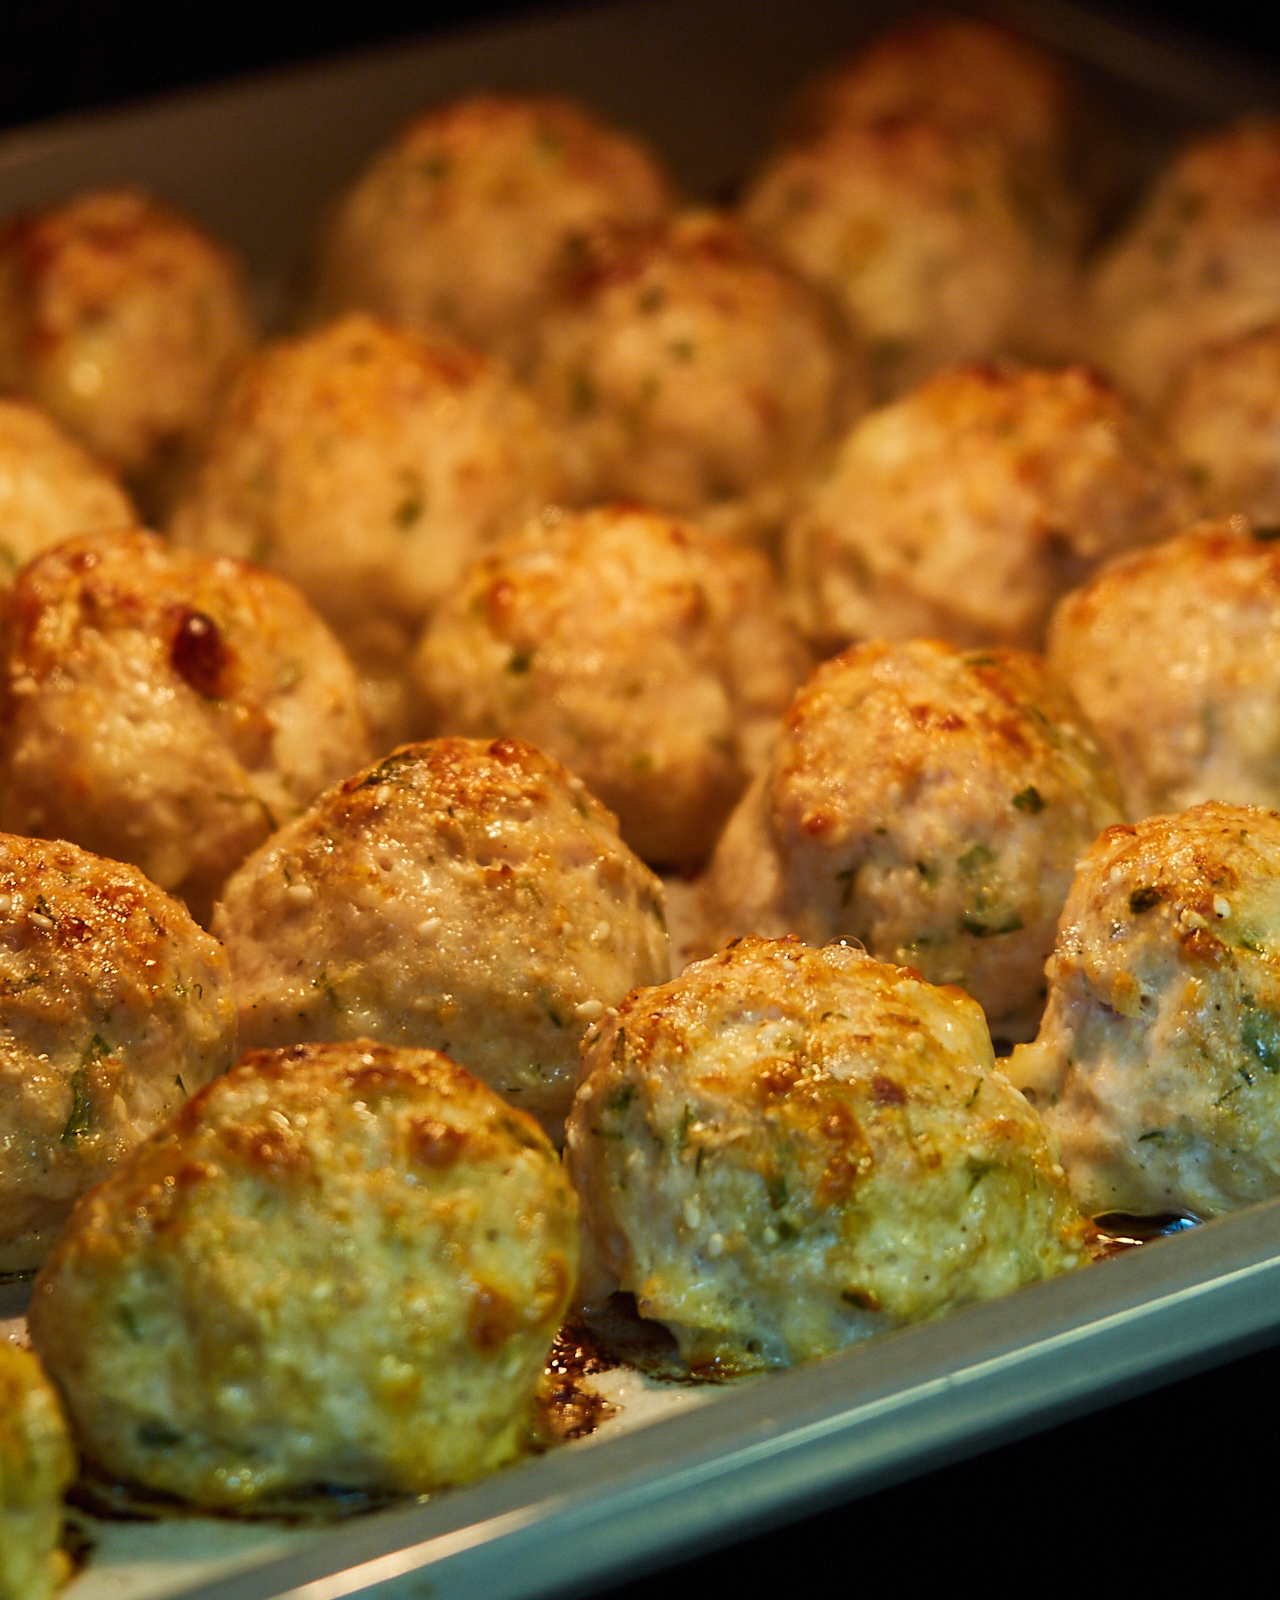 baked chicken meatballs